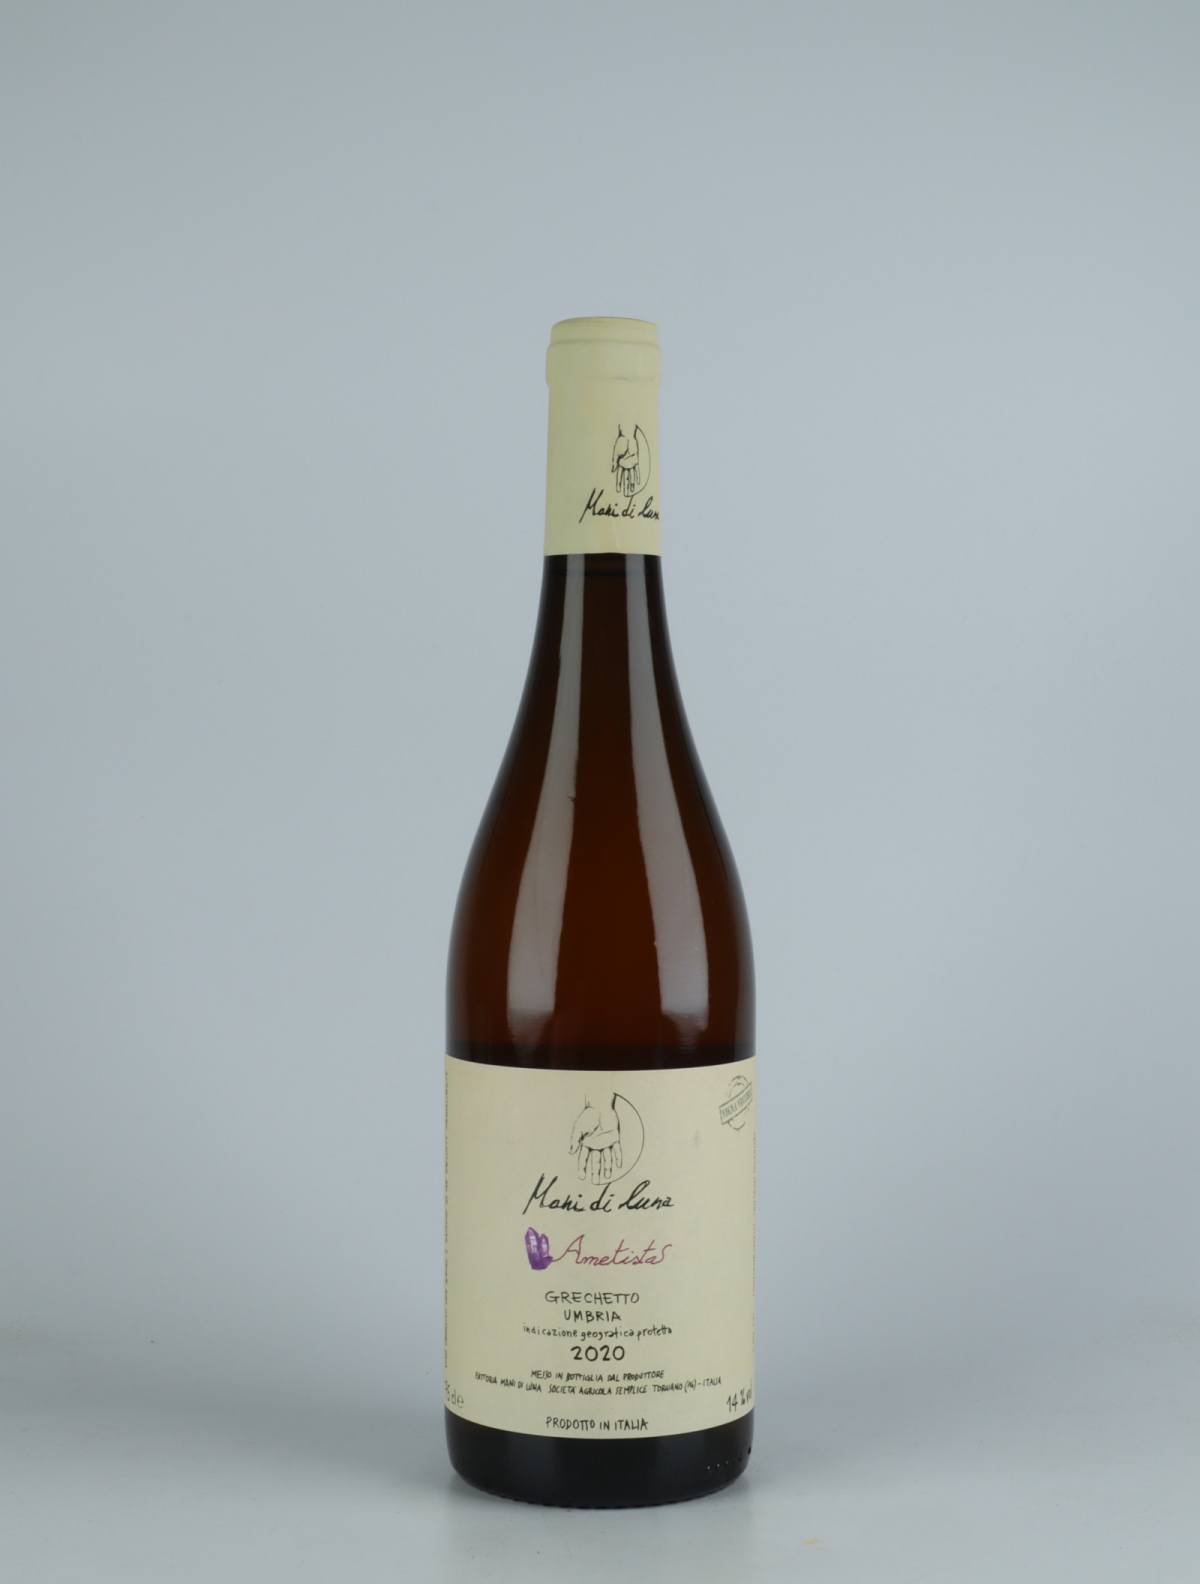 A bottle 2020 Ametistas Orange wine from Mani di Luna, Umbria in Italy